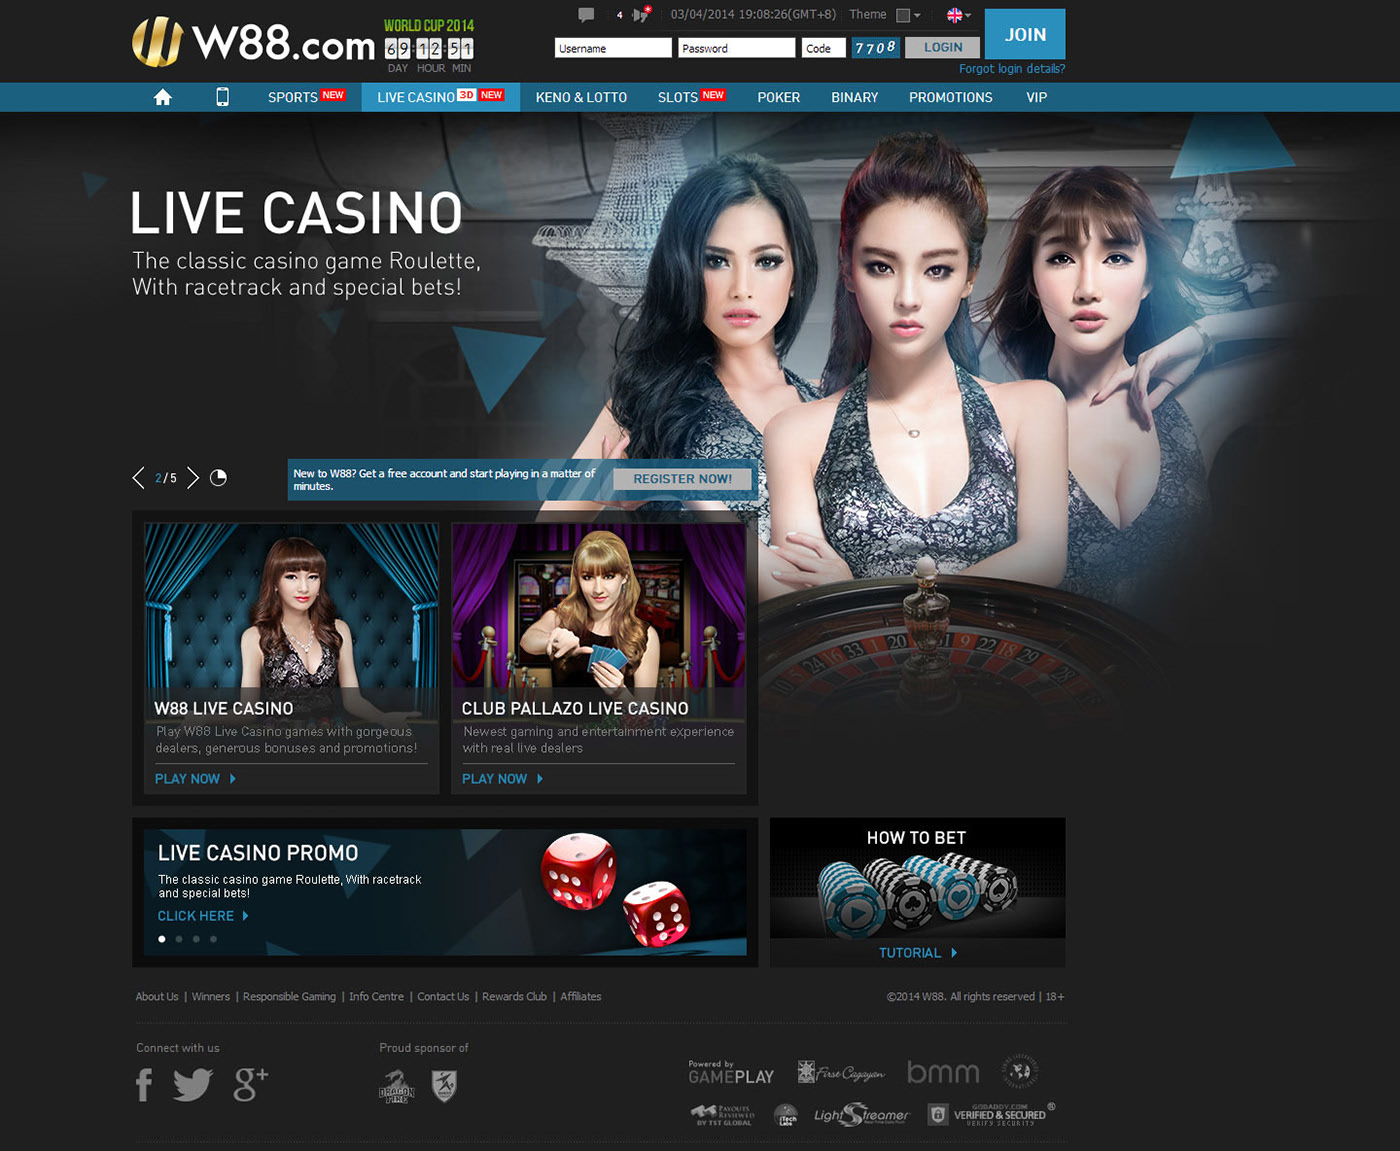 This site uses keywordluv website casino online cat casino top online casino website